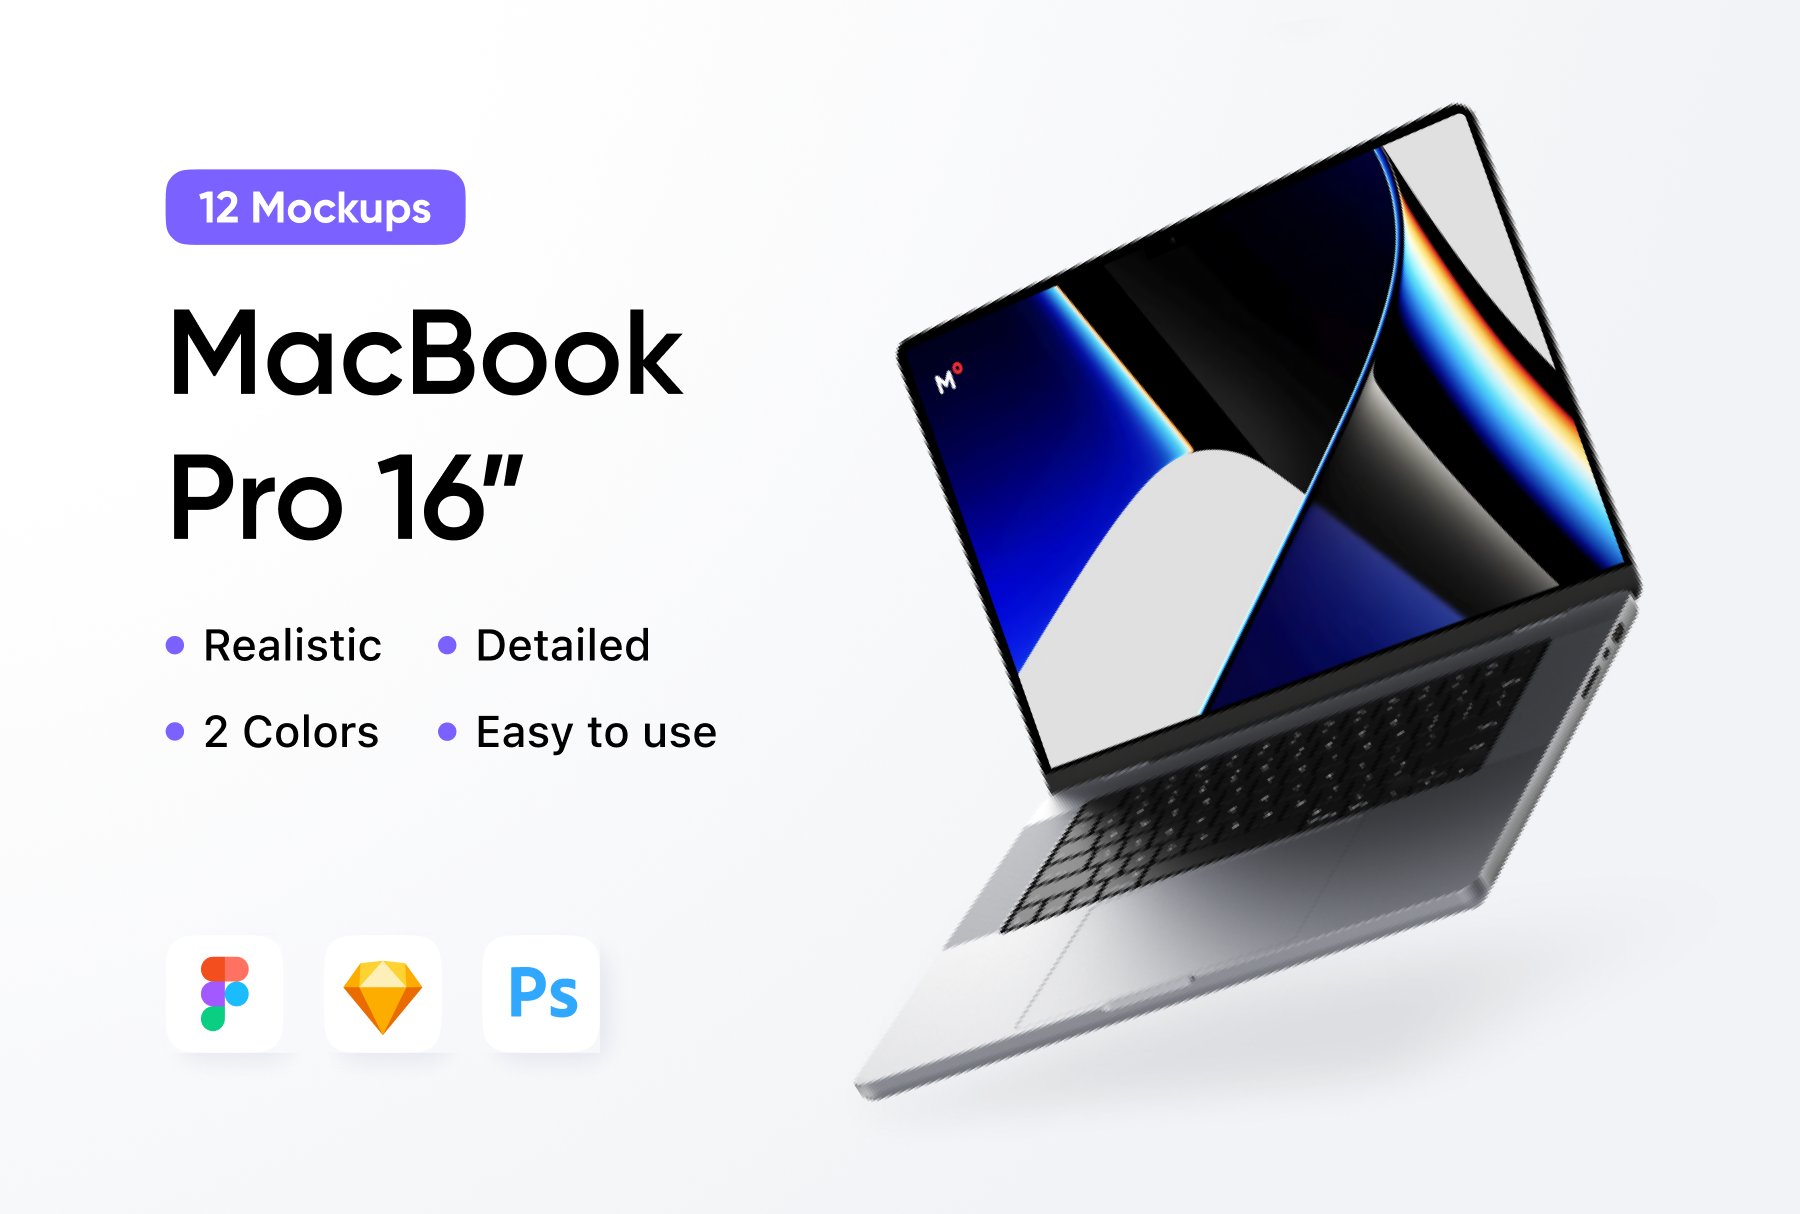 12 MacBook Pro 16" Mockups Scenes cover image.